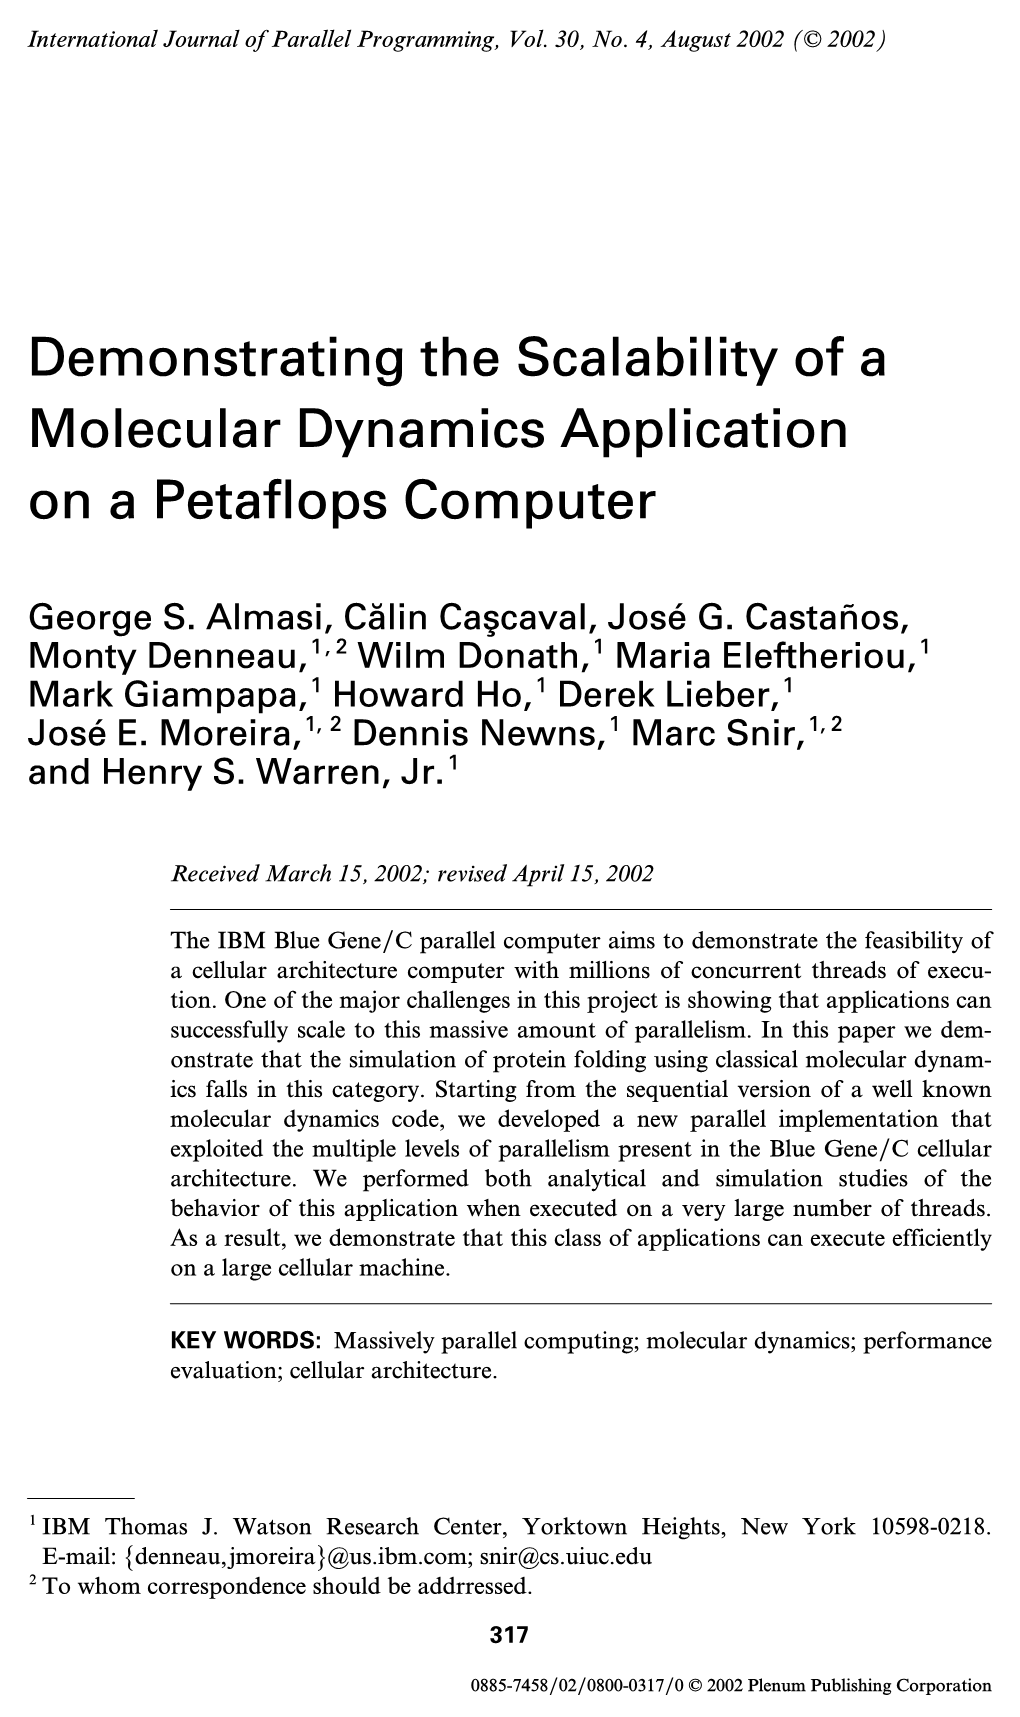 Demonstrating the Scalability of a Molecular Dynamics Application on a Petaflops Computer